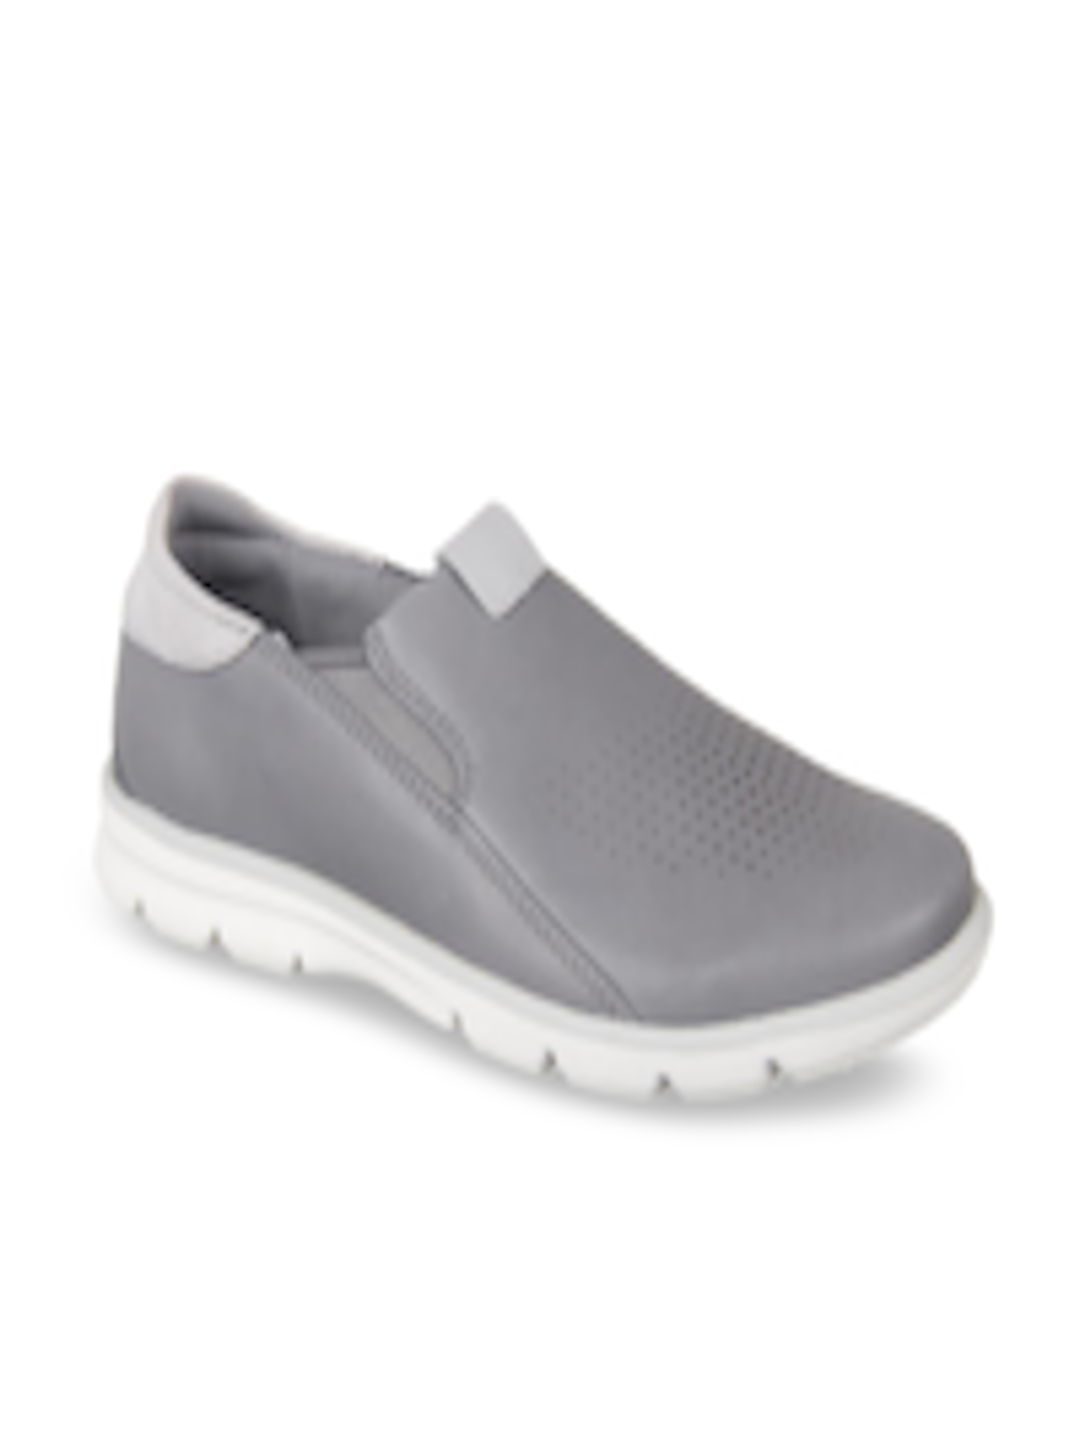 Buy Clarks Men Grey Slip On Sneakers - Casual Shoes for Men 9488687 ...